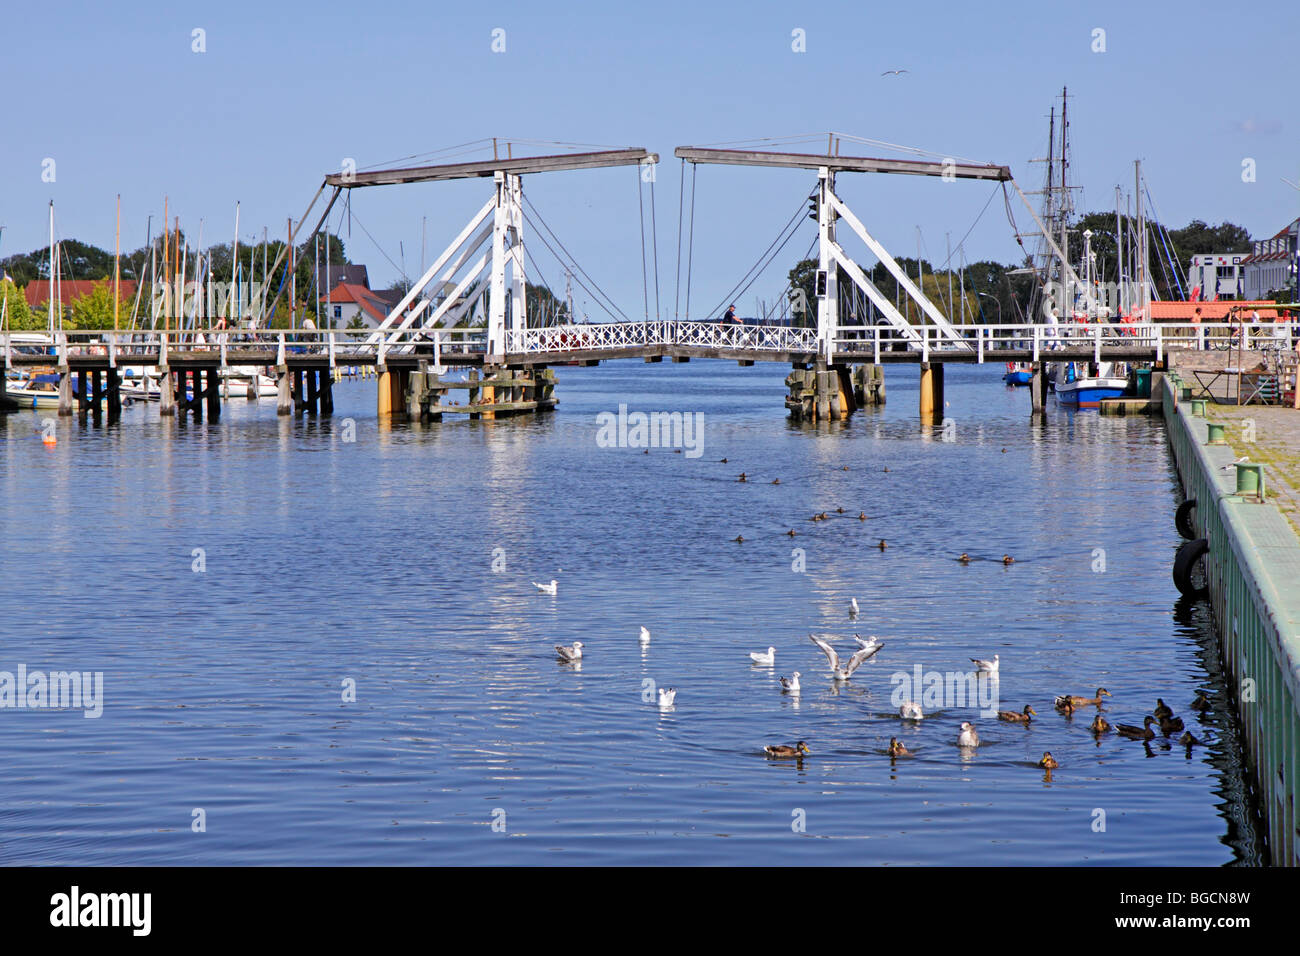 Unruhbrücke, Wieck, Greifswald, Mecklenburg-West Pomerania, Deutschland Stockfoto